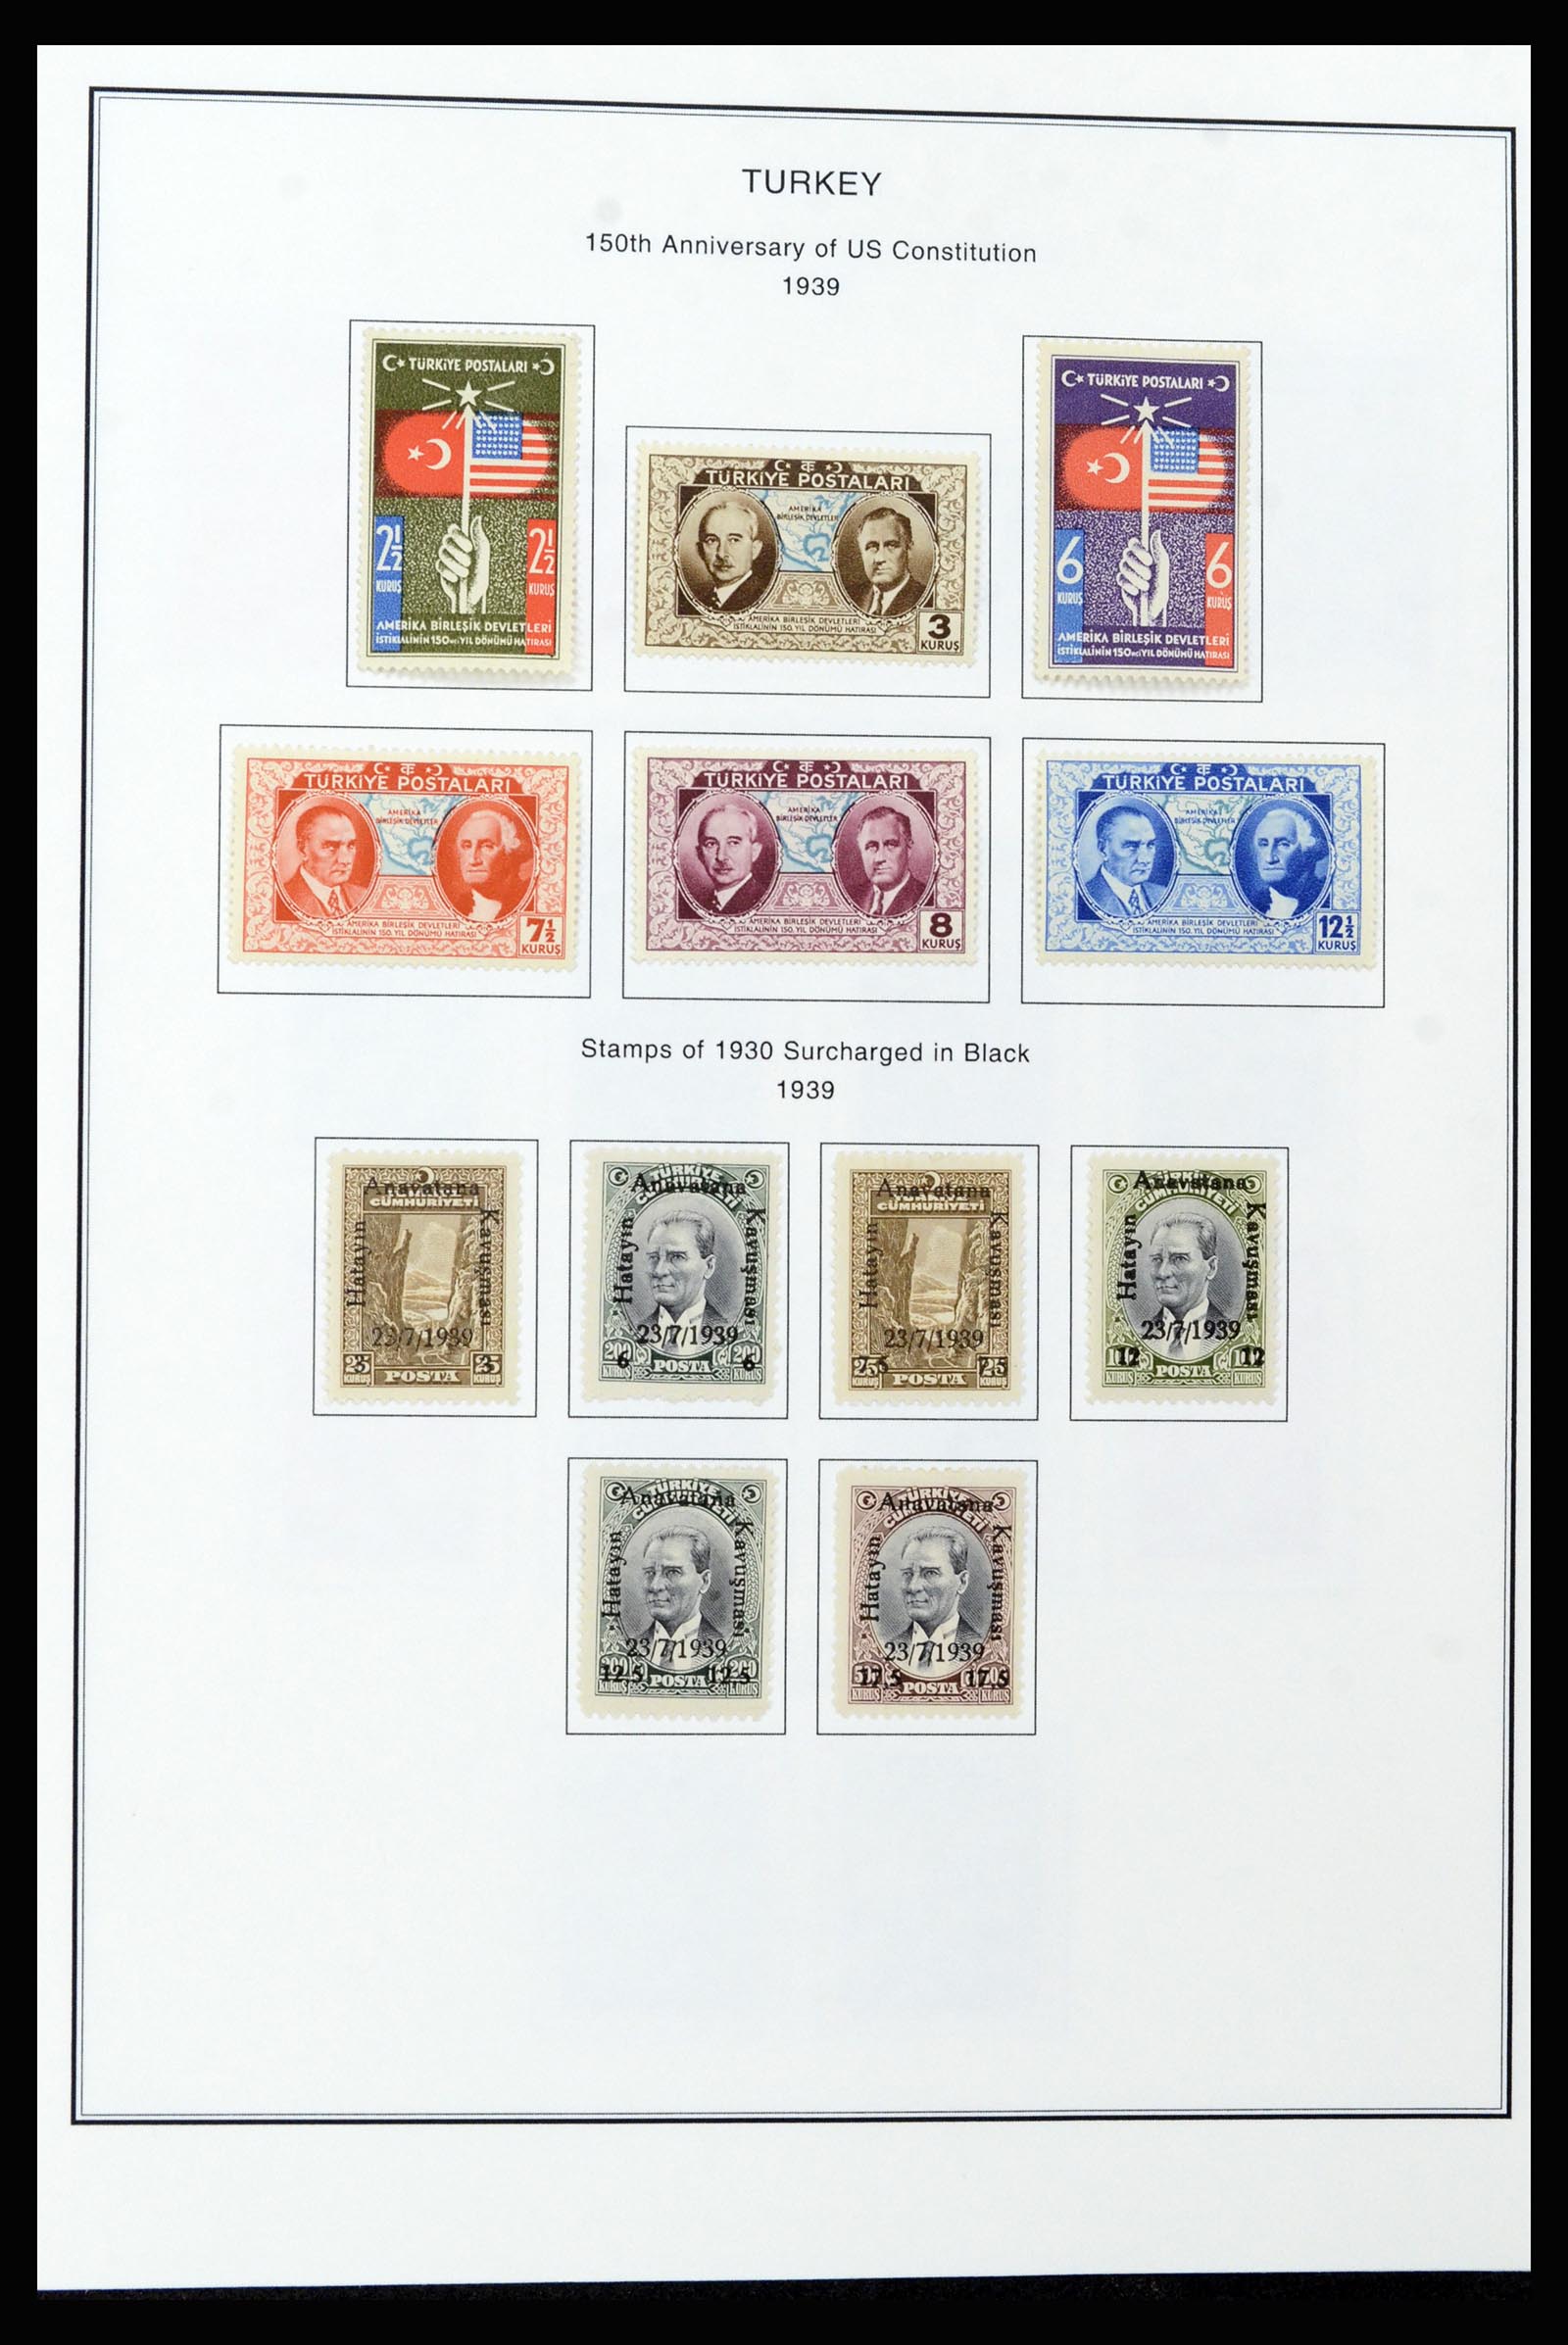 37224 050 - Stamp collection 37224 Turkey 1863-2000.